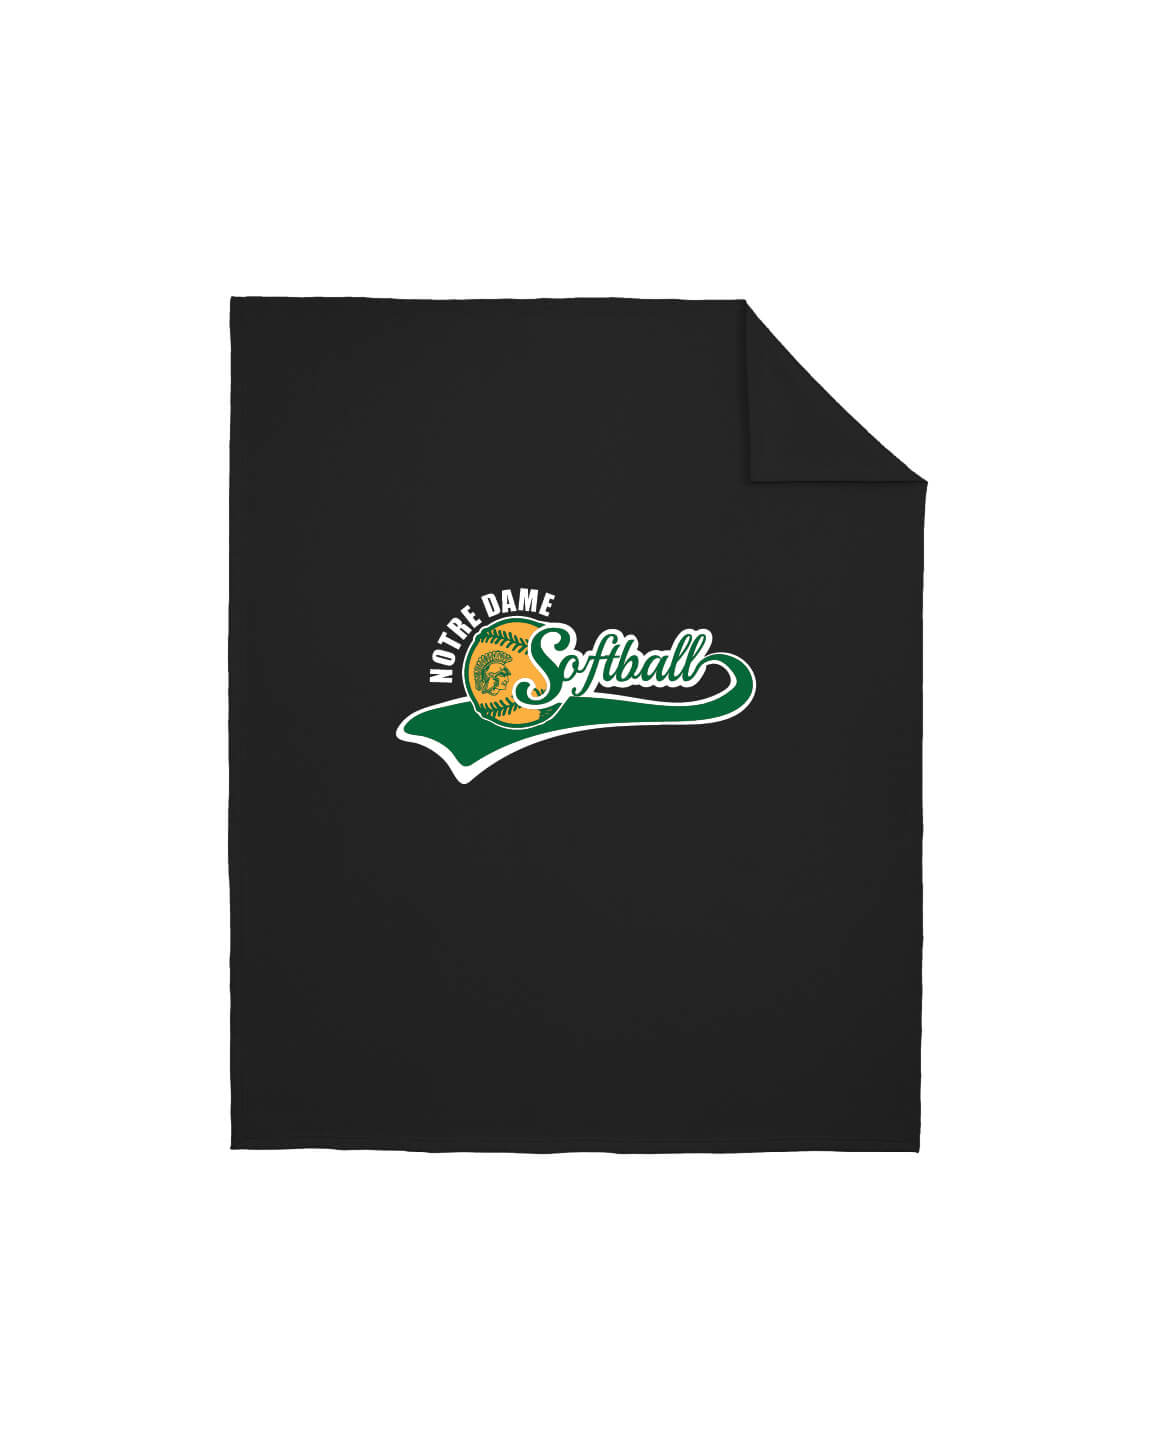 Notre Dame Softball Sweatshirt Blanket black